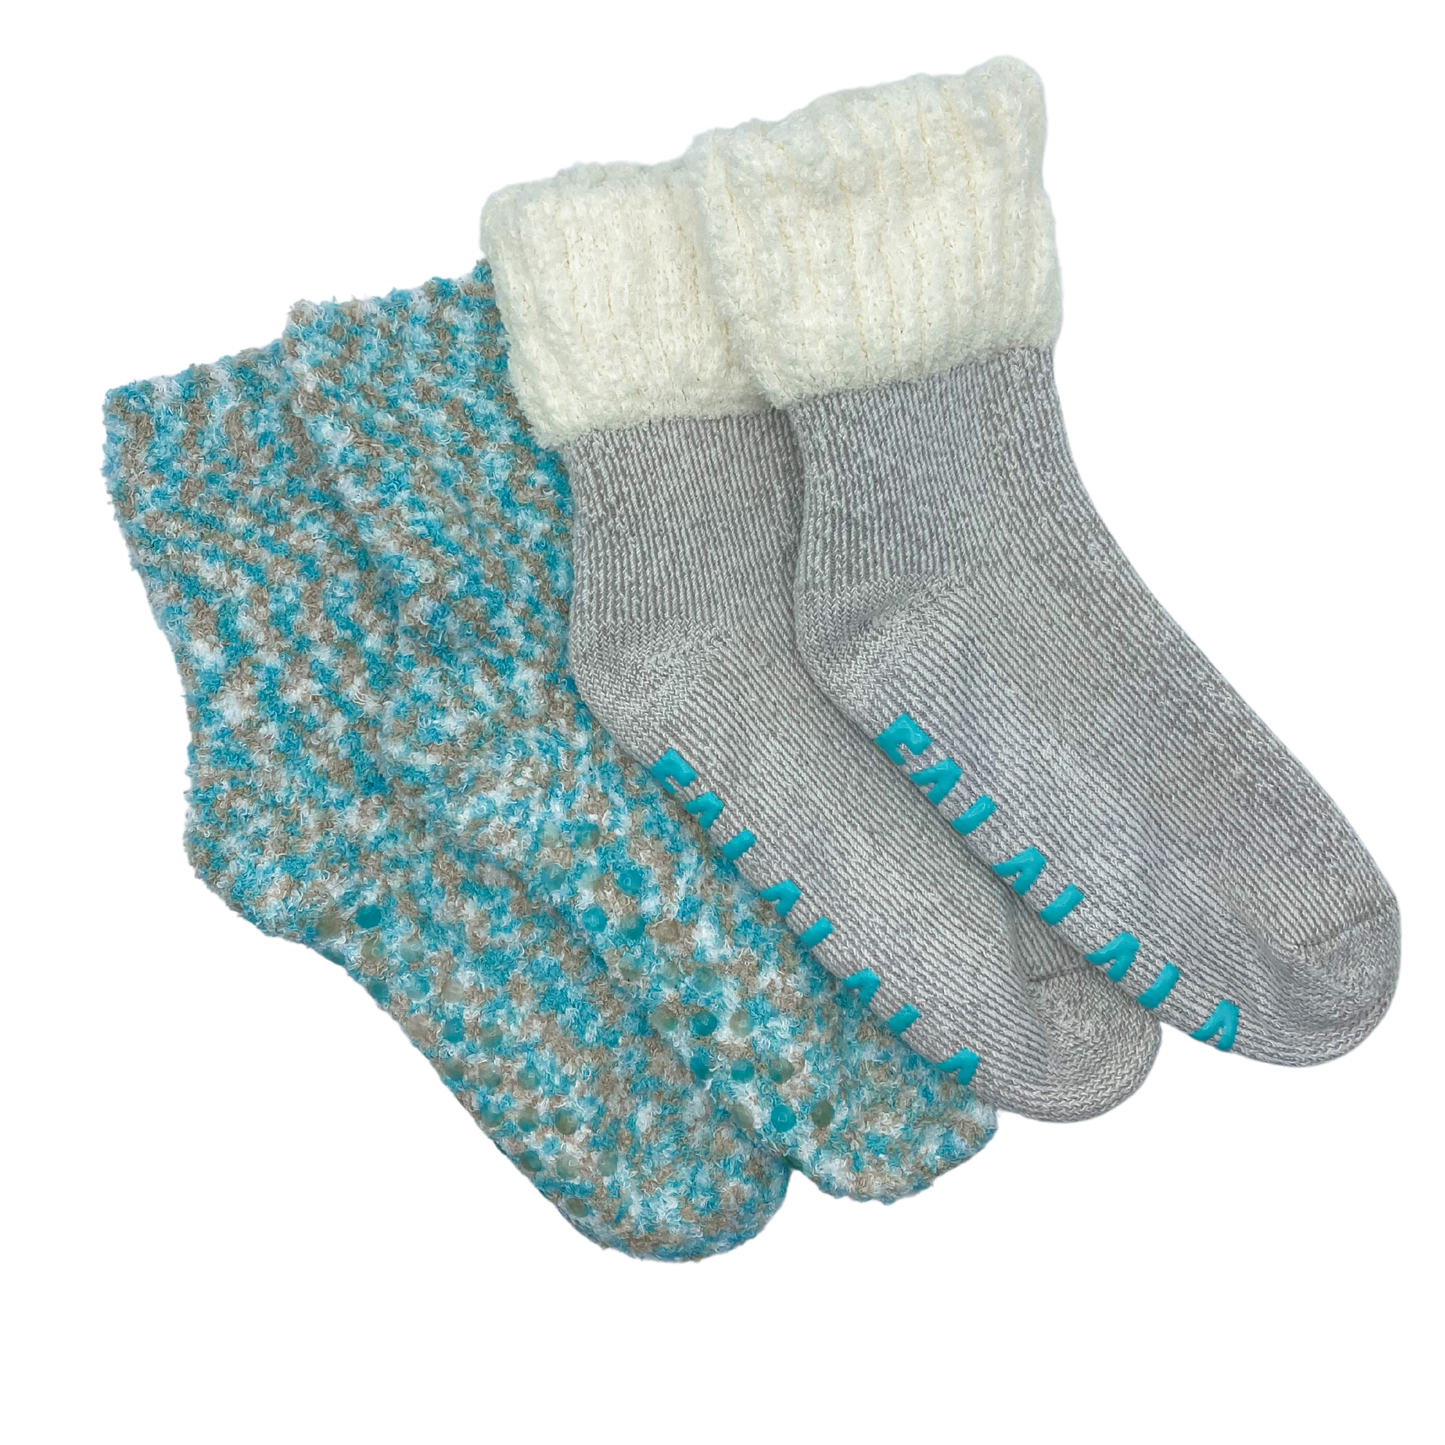 One white fuzzy sock featuring light blue FA LA LA LA shaped rubber gripper.